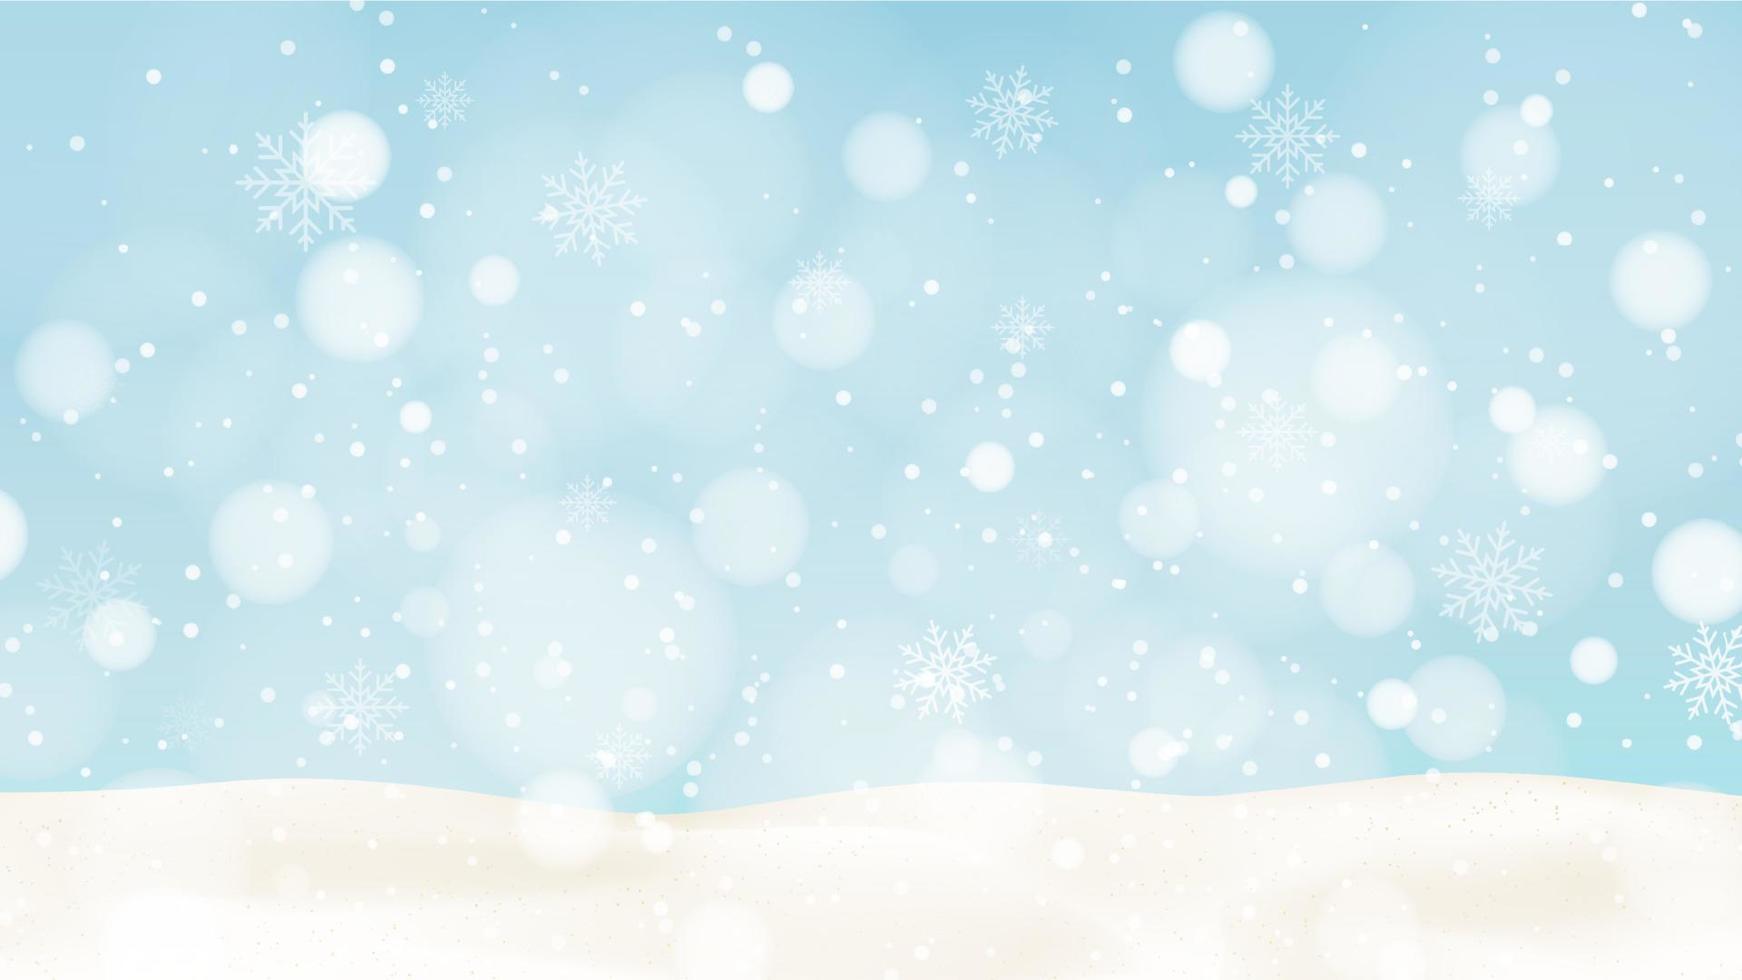 mooi Kerstmis achtergrond met bokeh en sneeuwvlok ontwerp vector